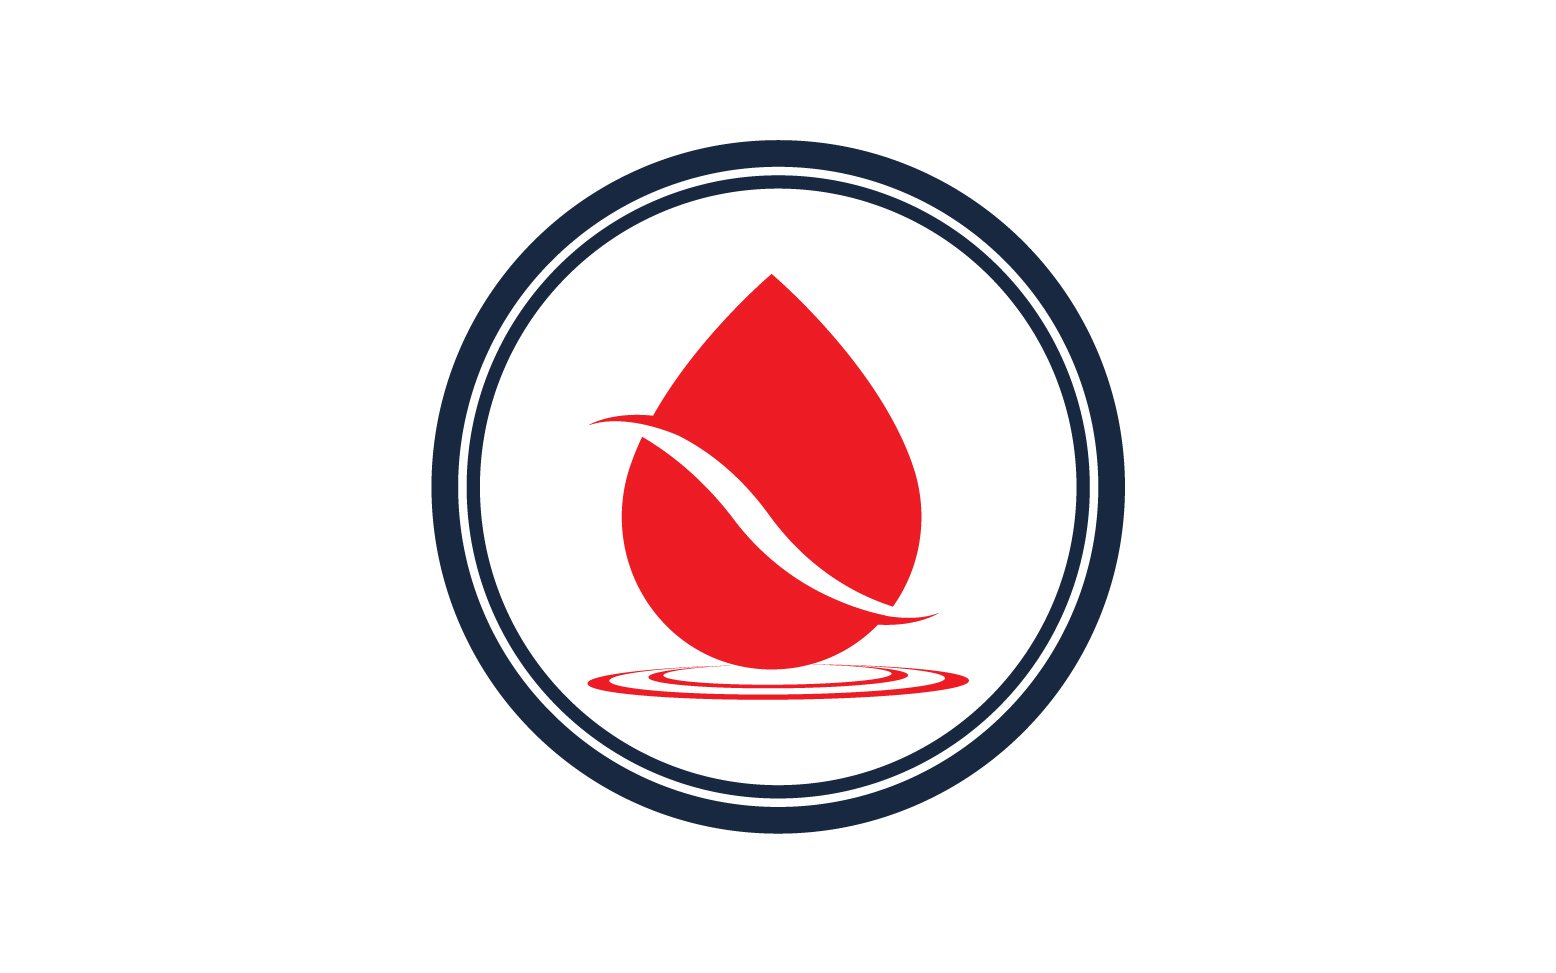 Blood drop icon logo template version v33